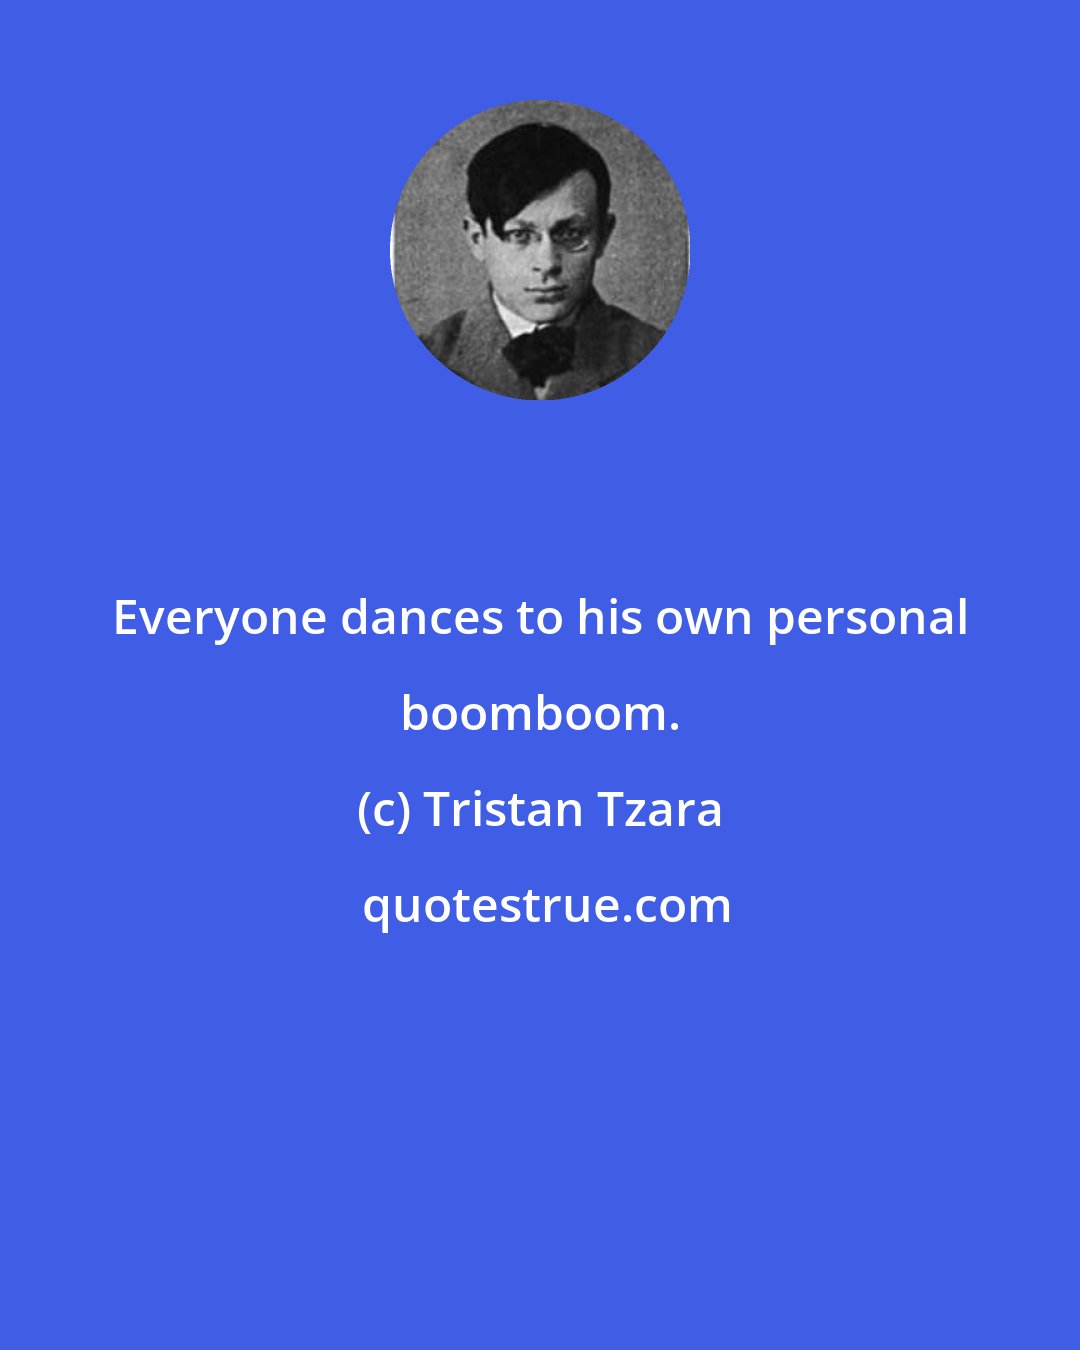 Tristan Tzara: Everyone dances to his own personal boomboom.